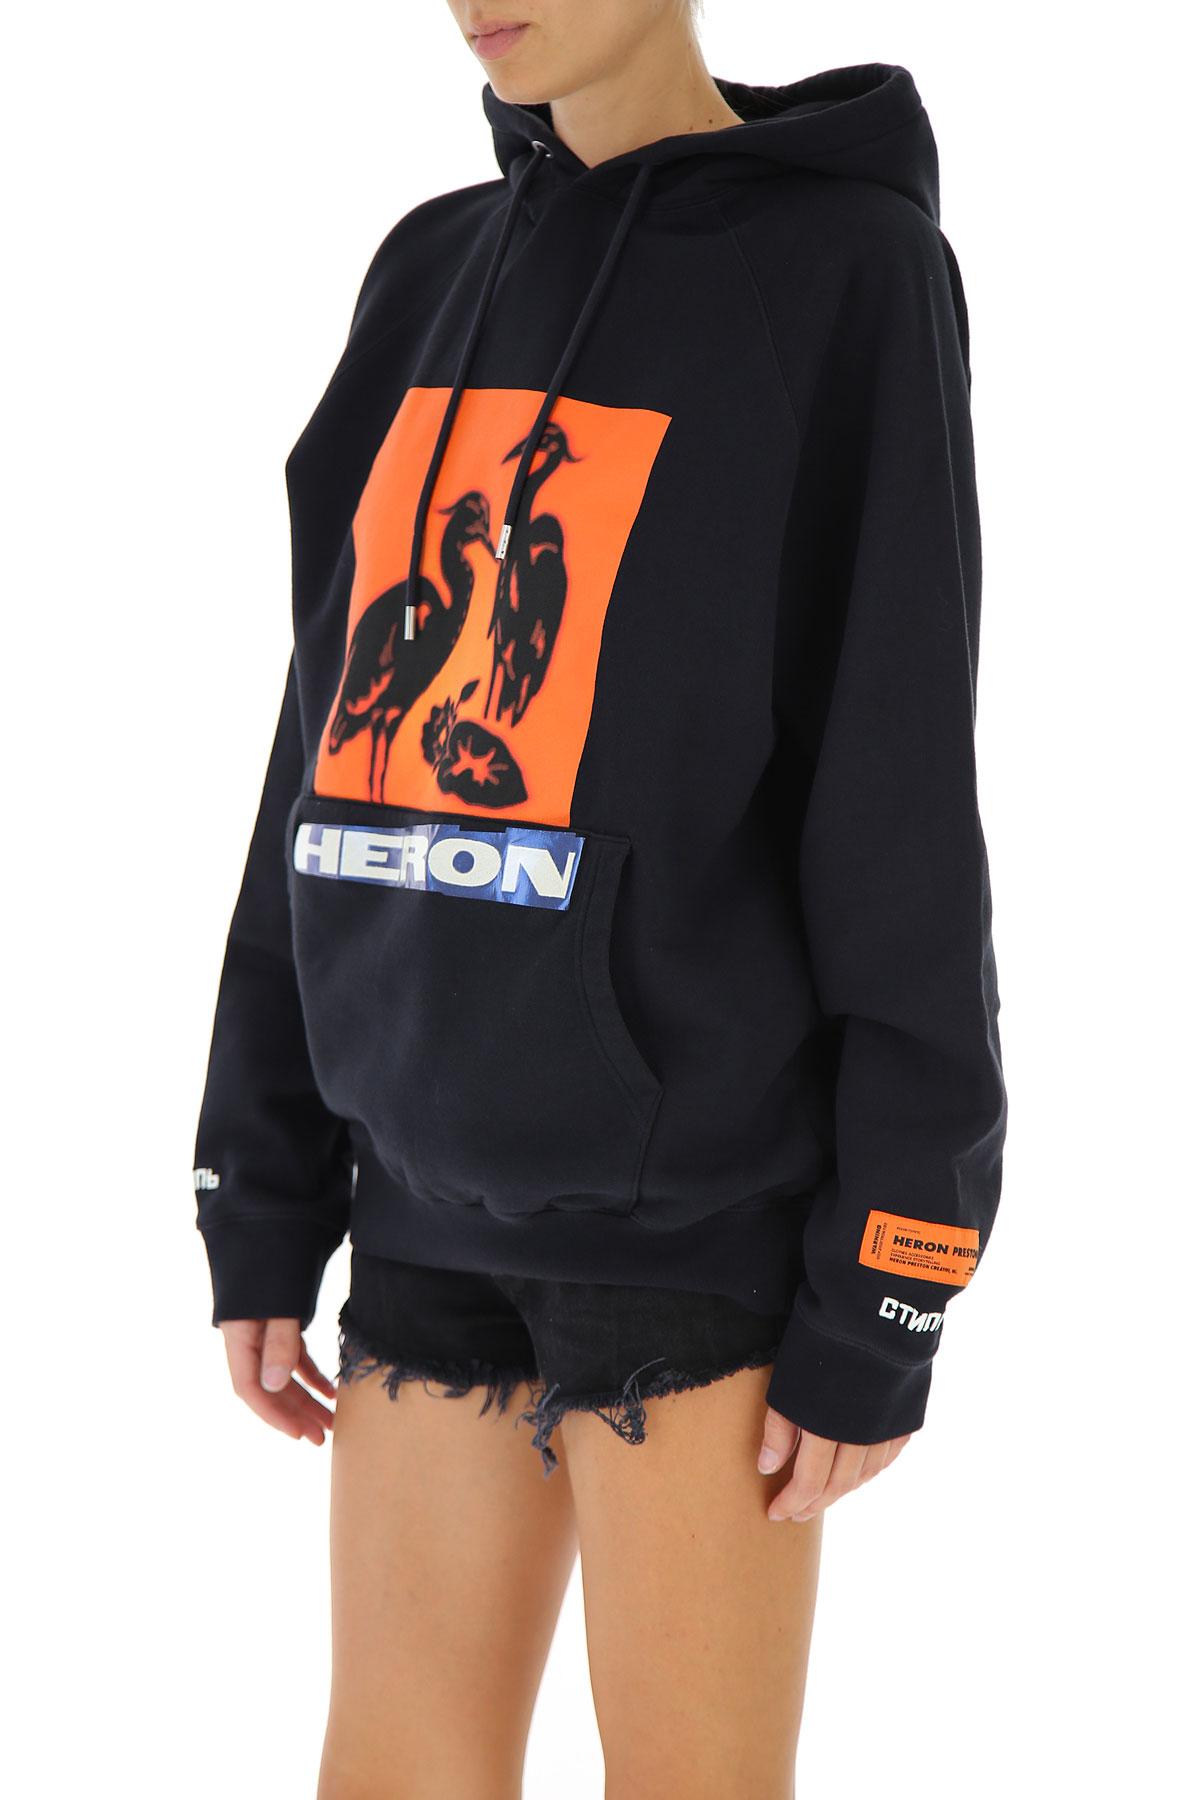 heron preston hoodie sale,Free delivery,zwh.com.pk